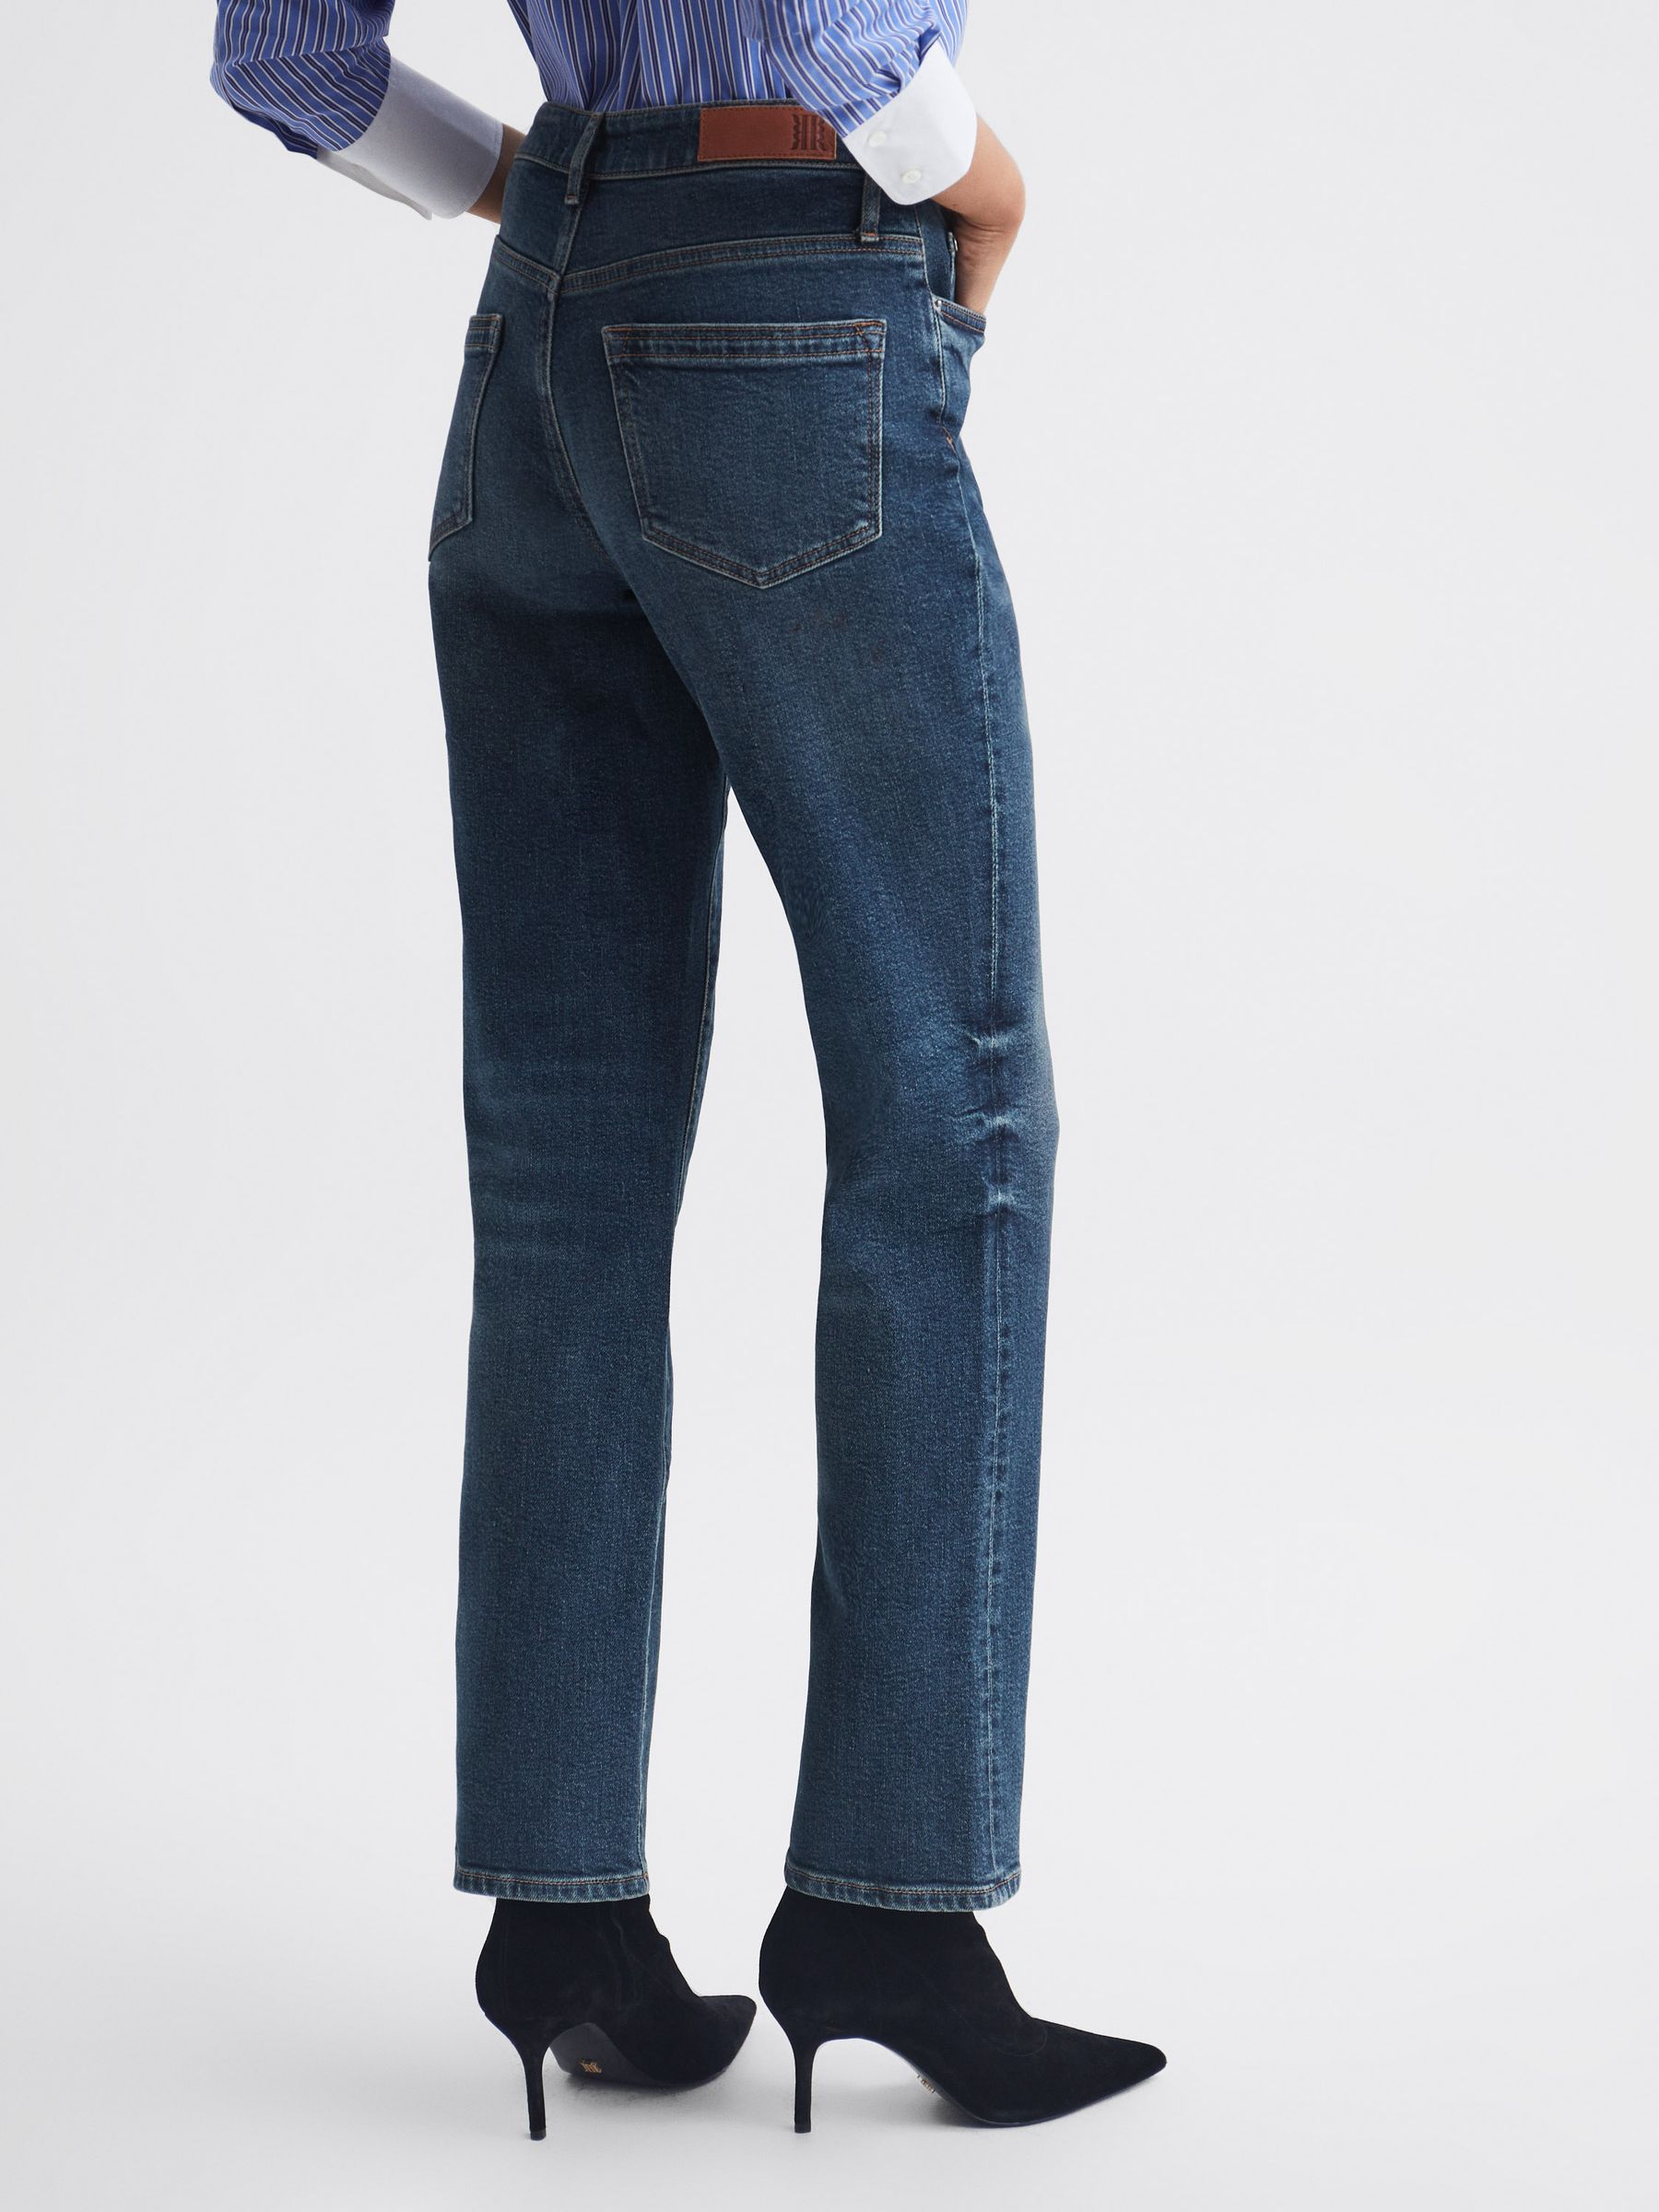 Reiss Phillipa Straight Leg Boyfriend Jeans | REISS USA